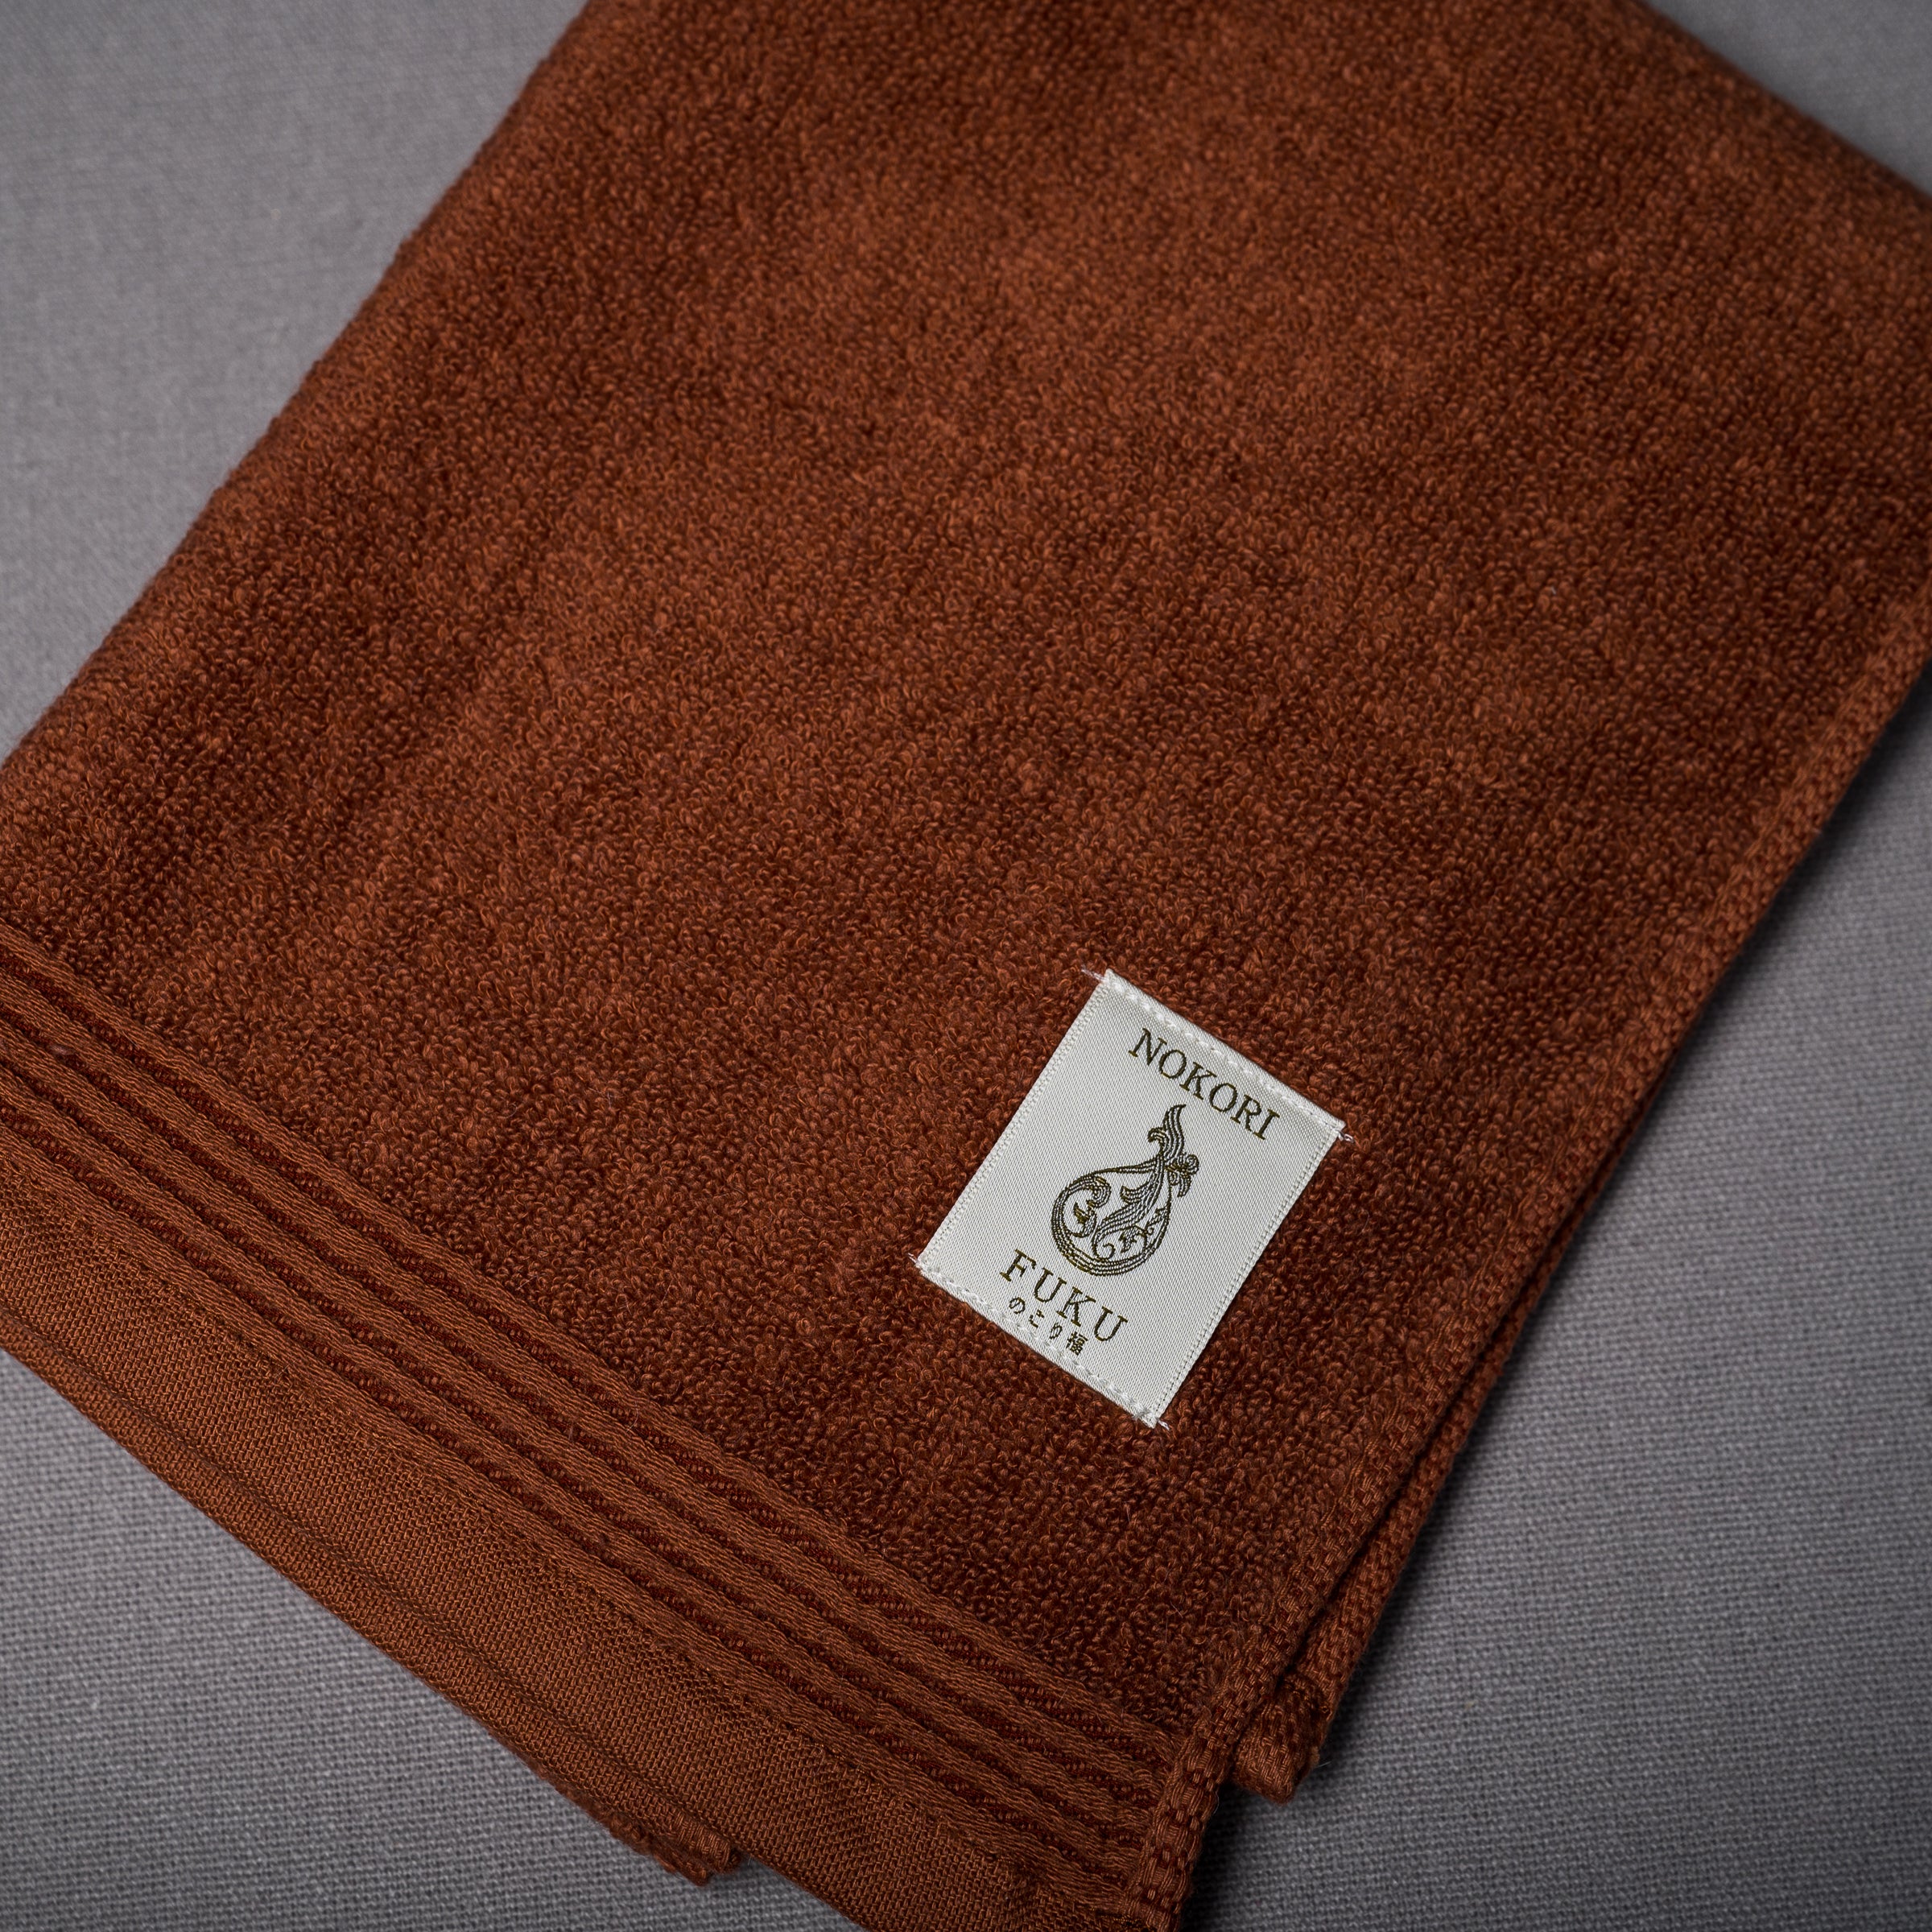 Premium Nokori Fuku Hand Towel - 4 Colours / 泉州タオル のこり福